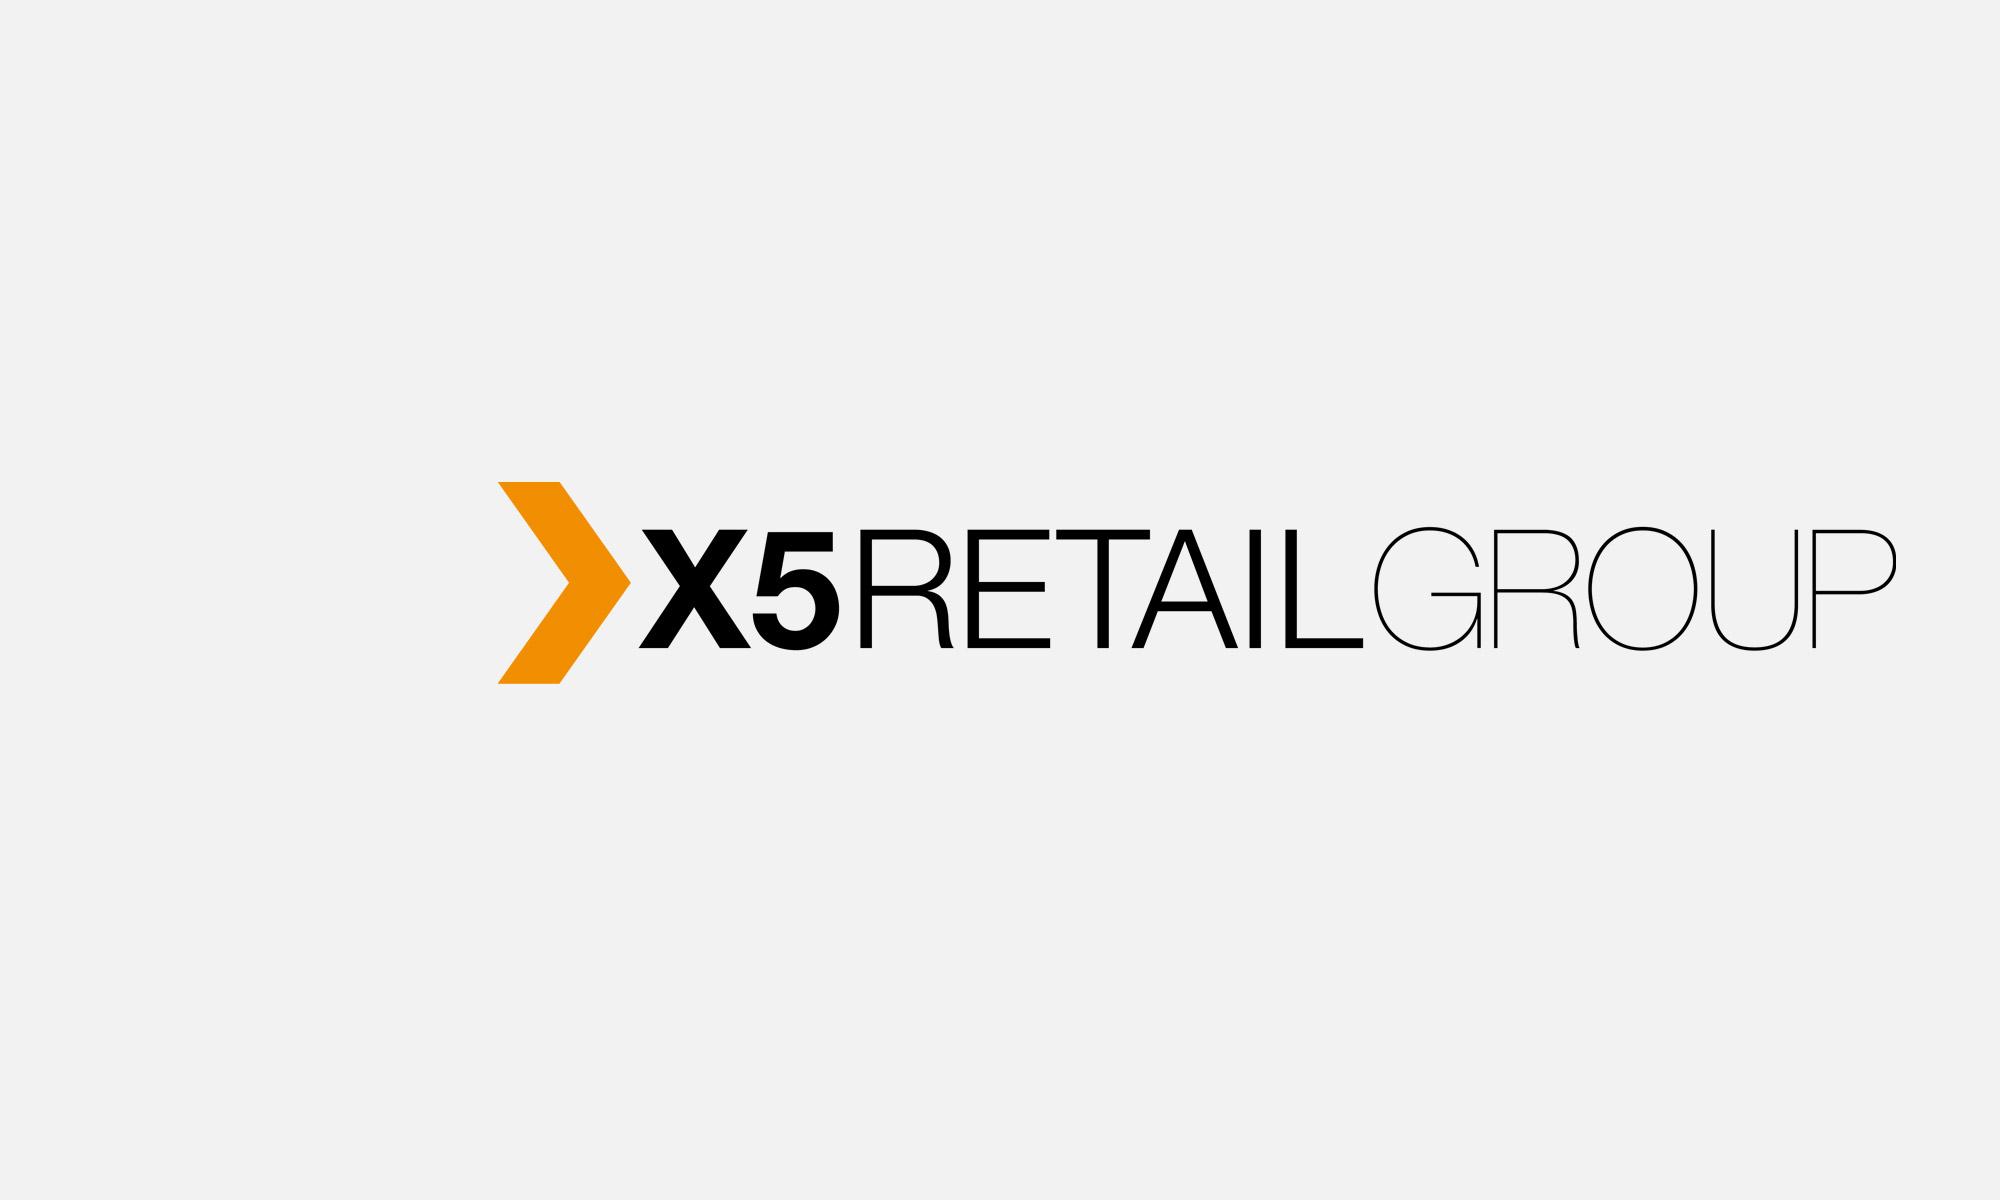 5 b ру. Х5 Retail Group logo. Группа x5 Retail Group. Х5 Ритейл групп логотип. X5 Retail Group logo PNG.